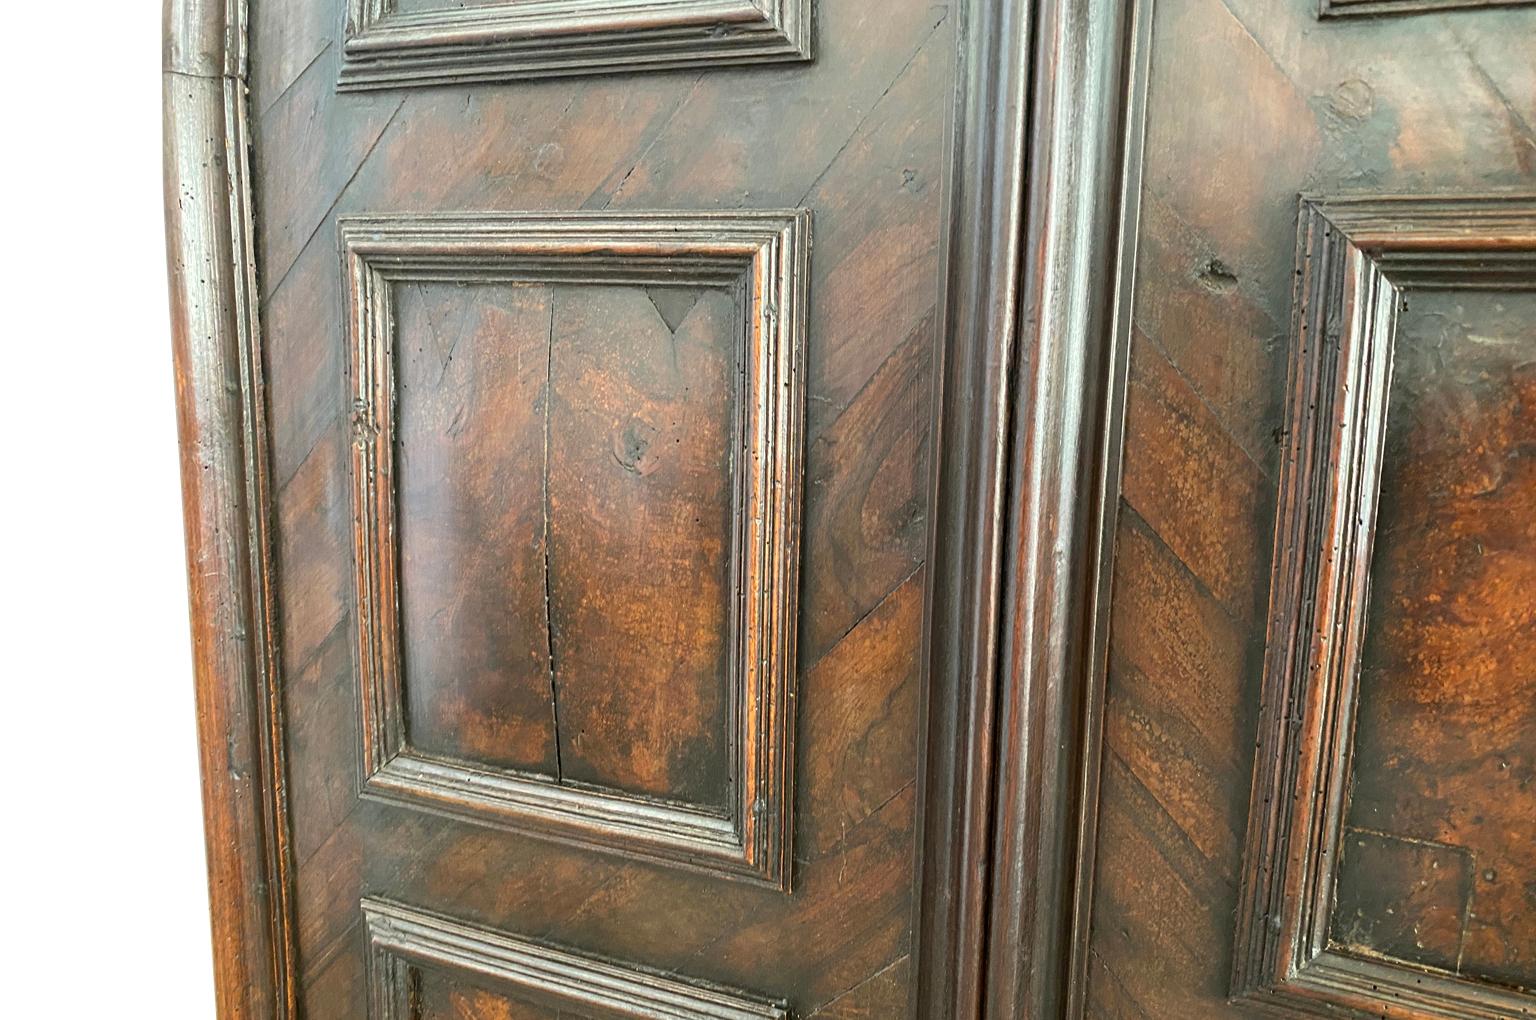 17th century doors